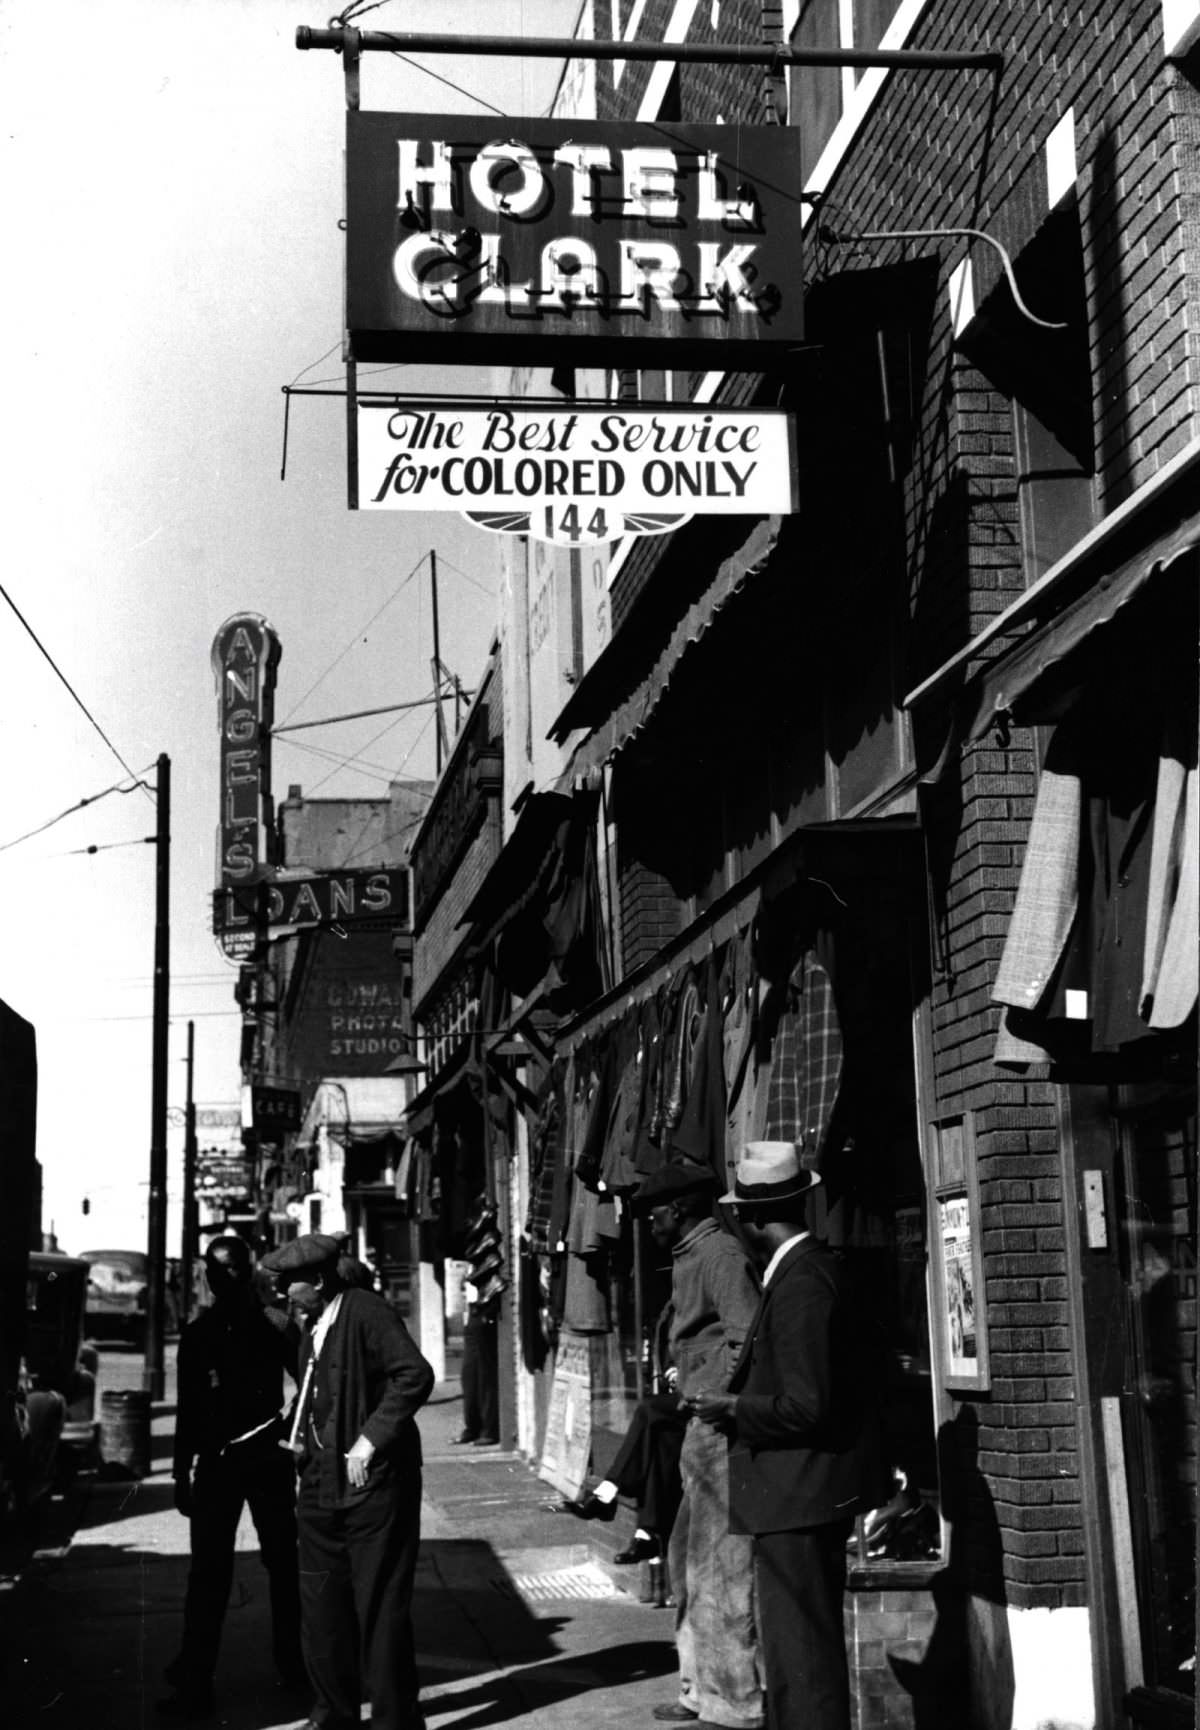 Hotel Clark on Beale Street, Memphis, 1939.